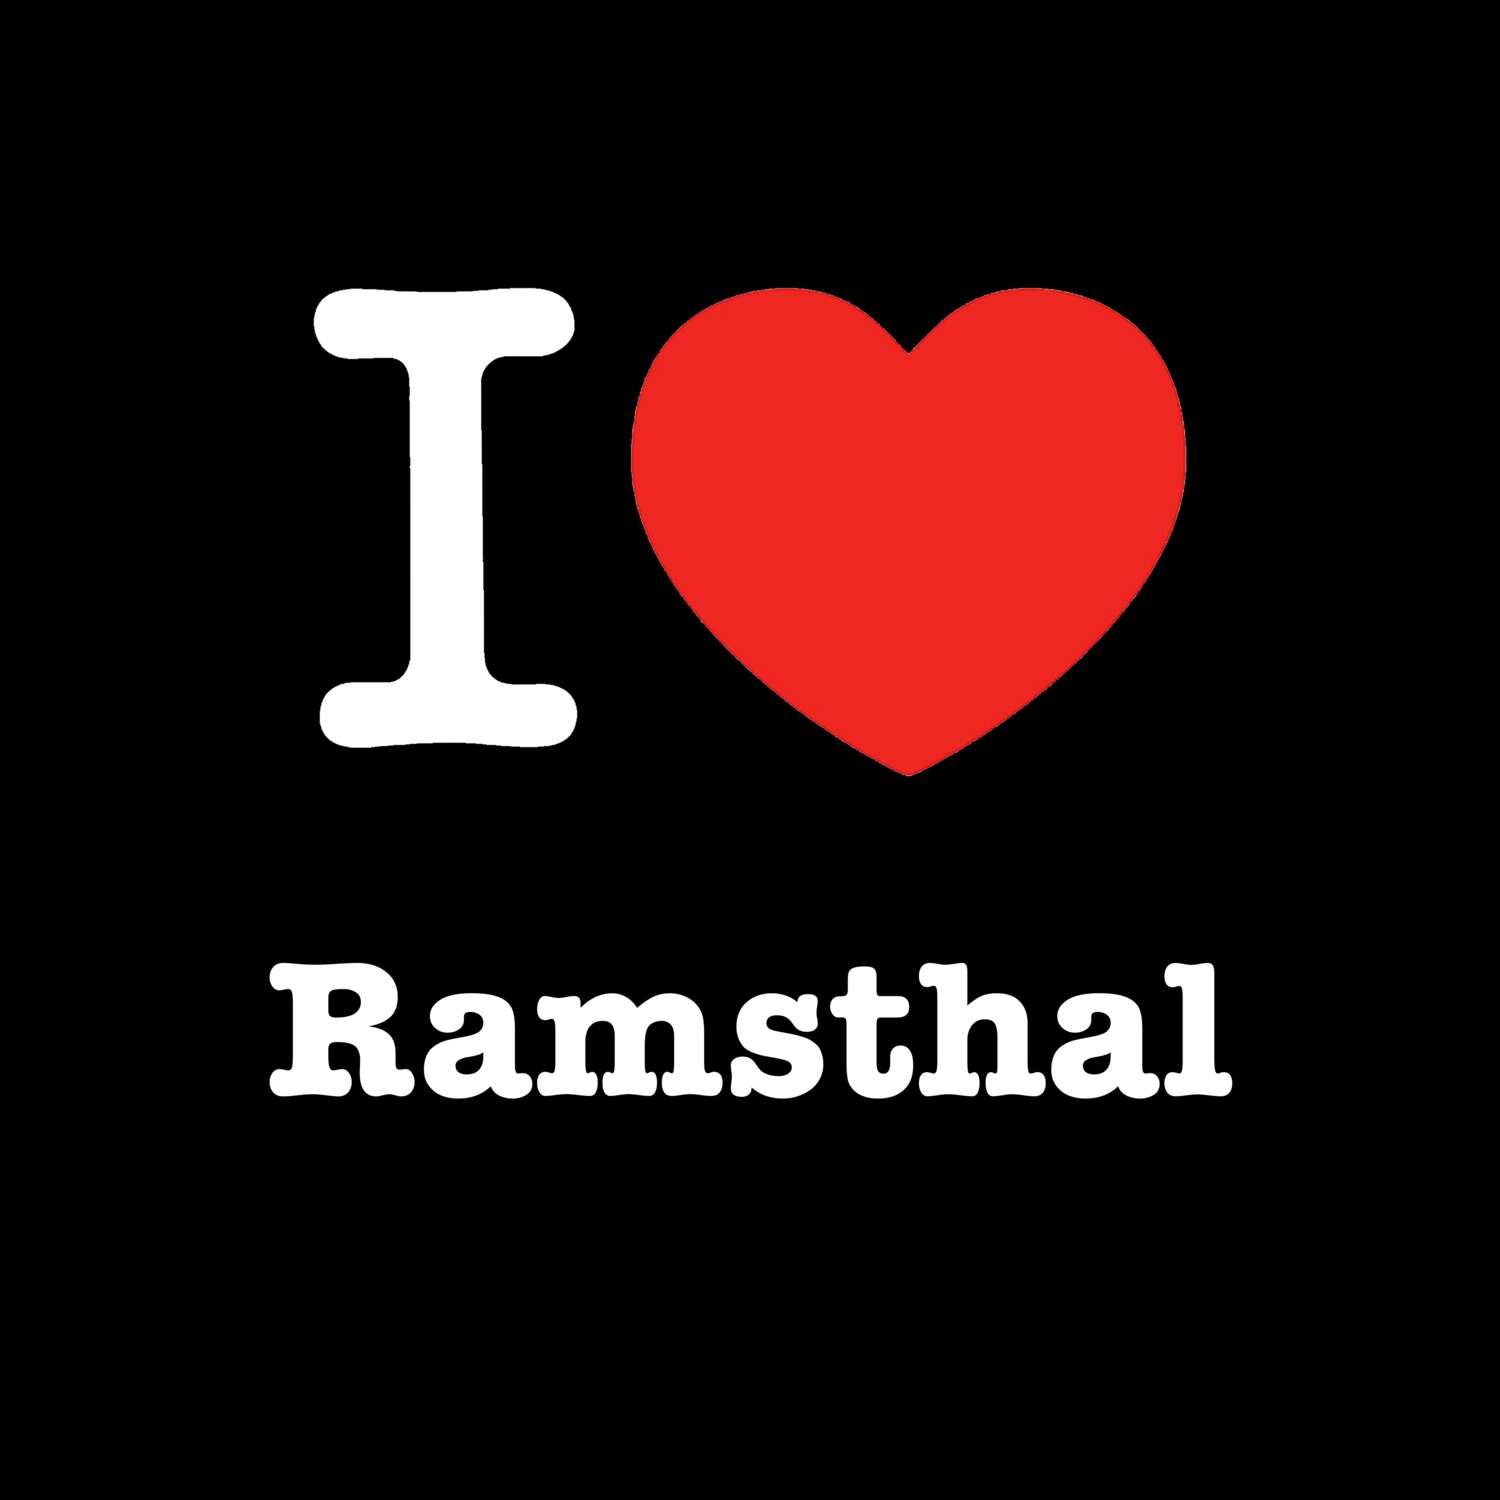 Ramsthal T-Shirt »I love«